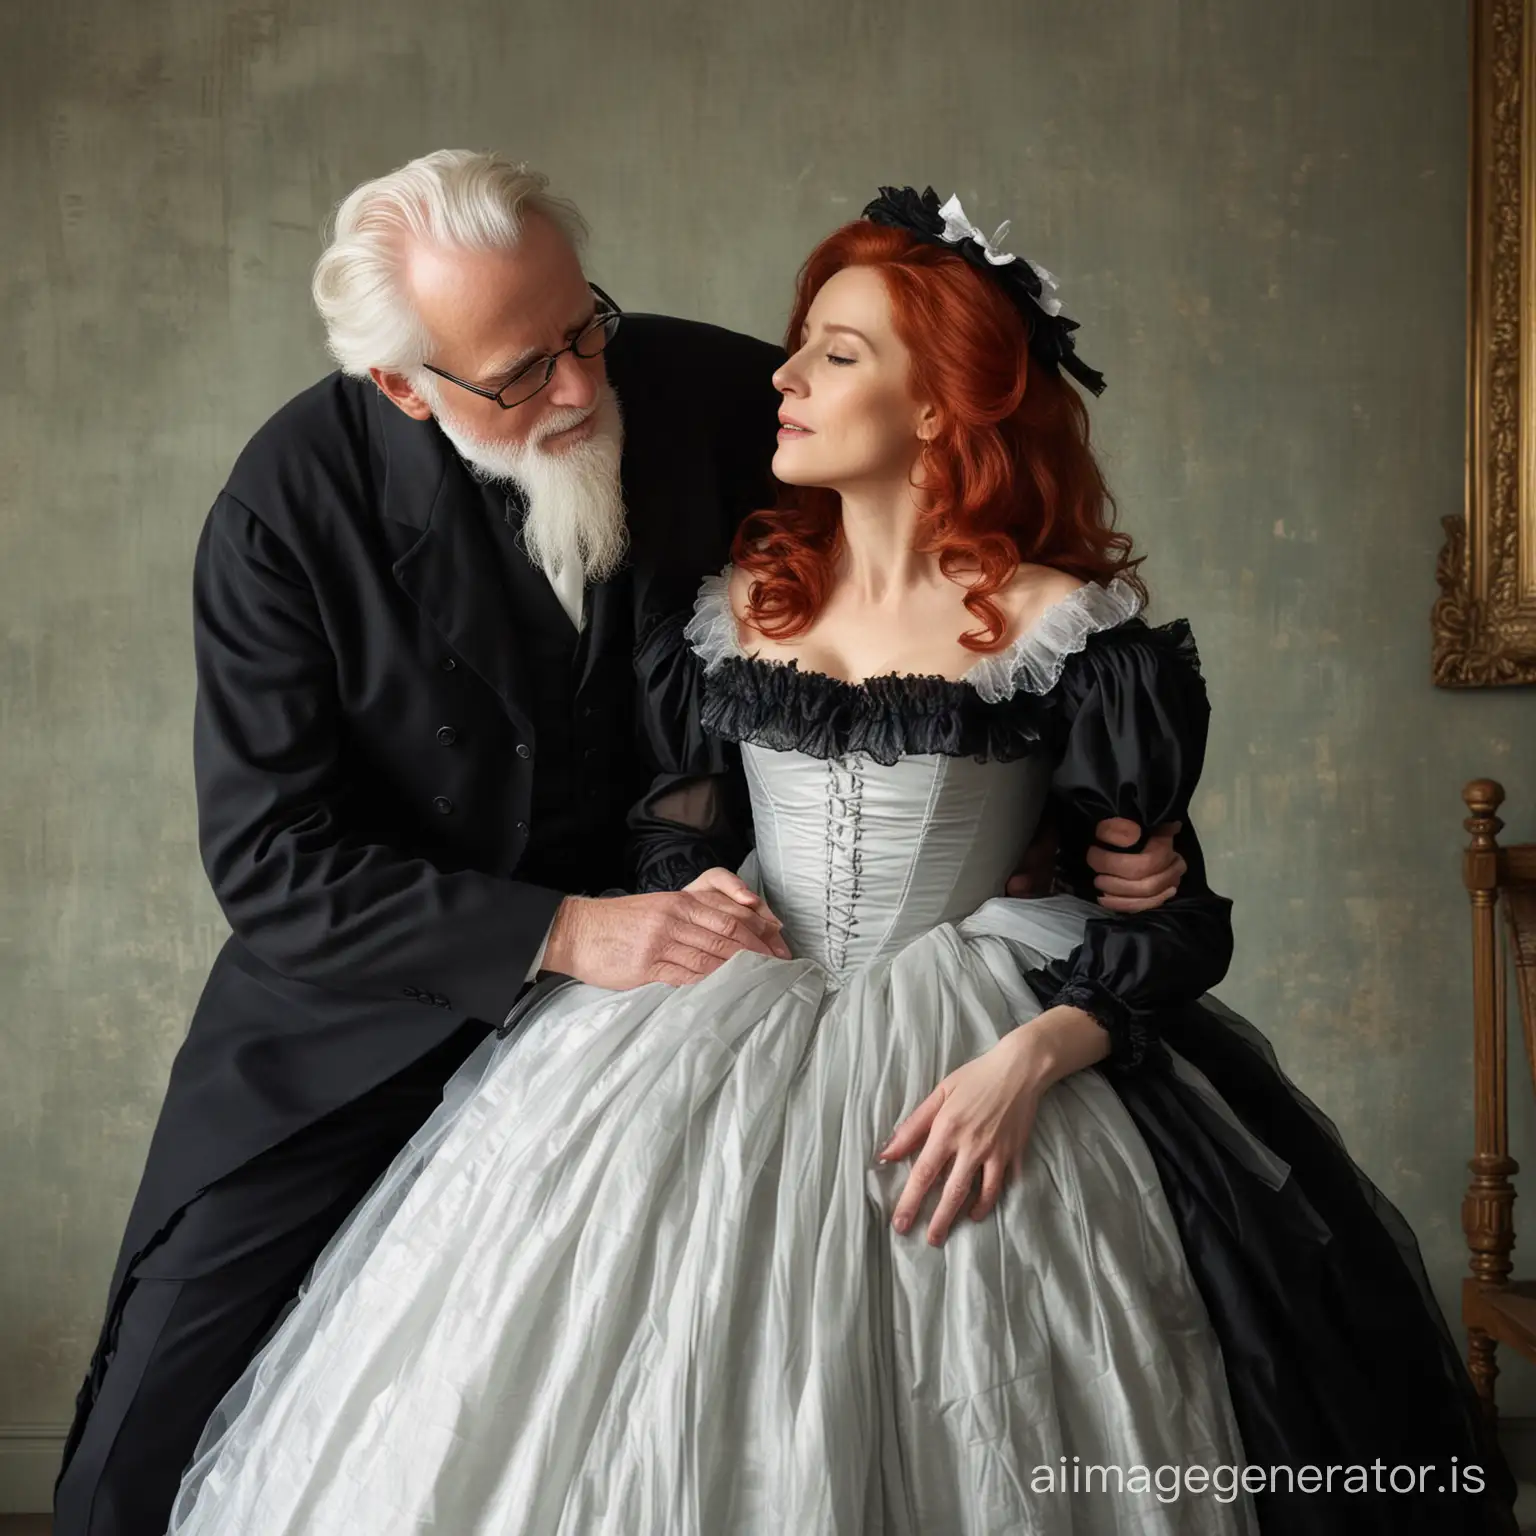 Romantic-Vintage-Wedding-Redhaired-Gillian-Anderson-Embracing-Her-Elderly-Groom-in-Victorian-Attire